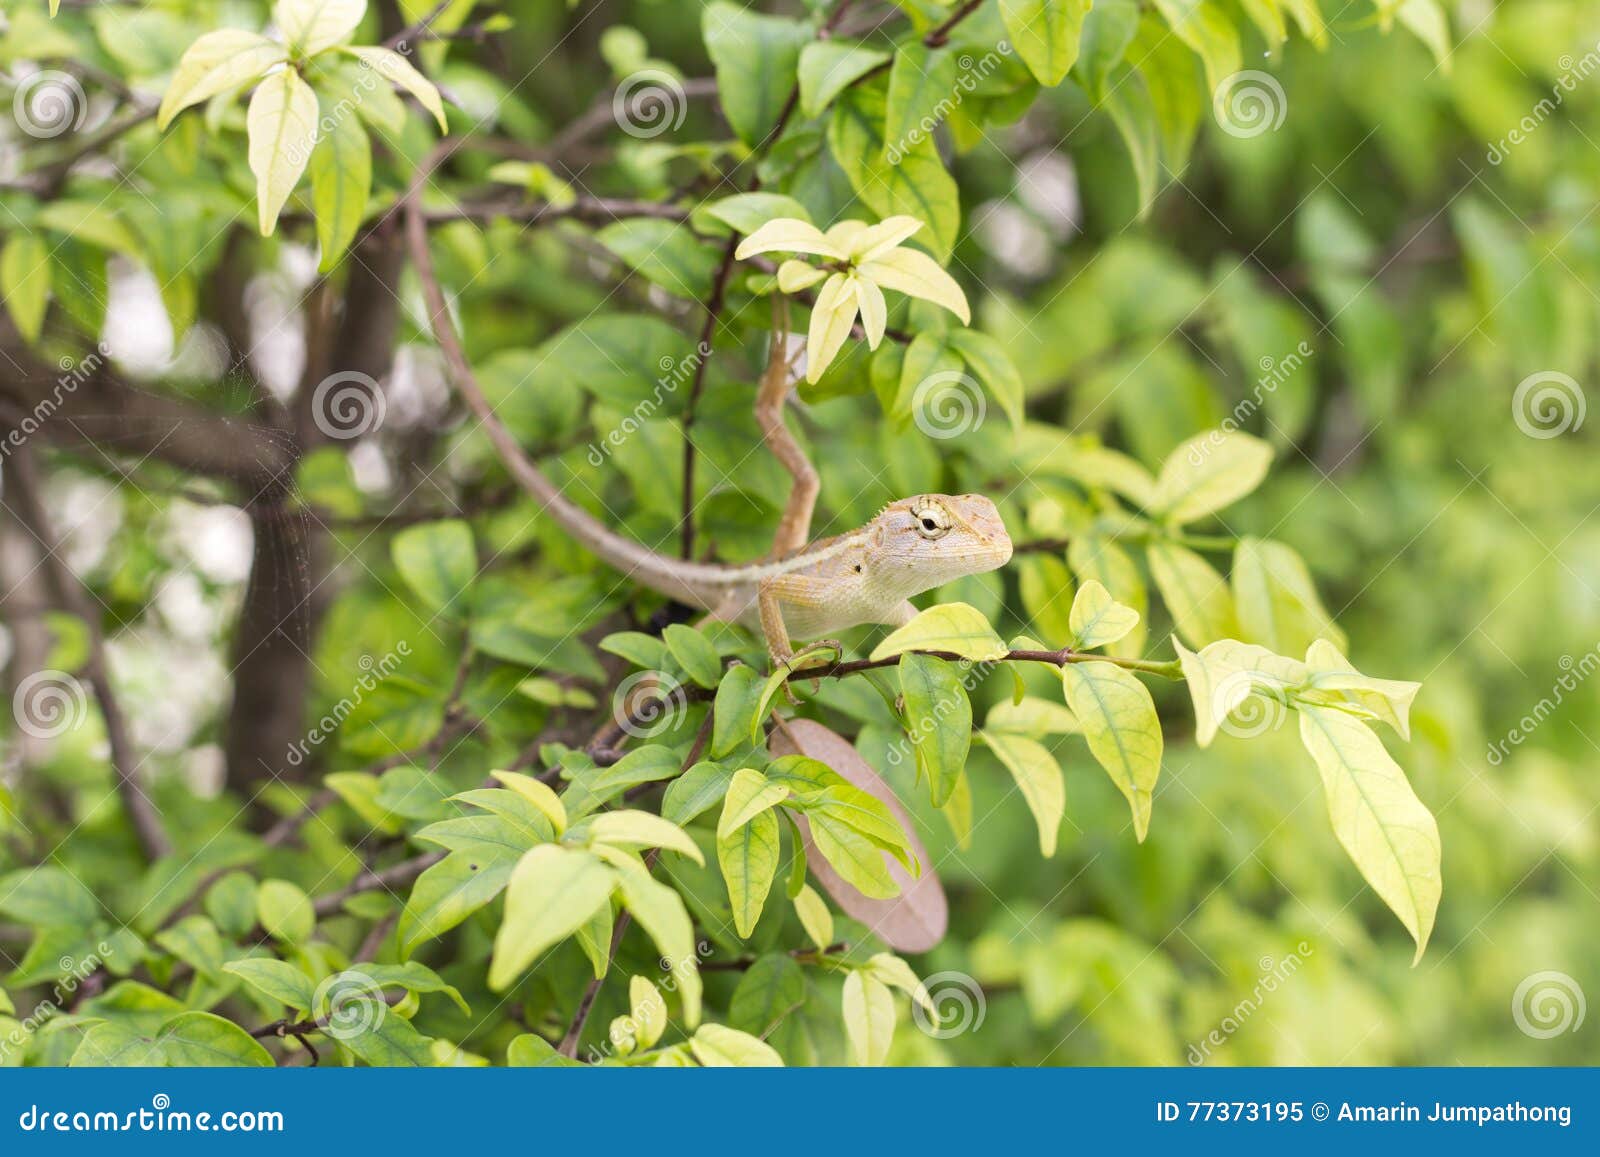 Chameleon dragon stock image. Image of gecko, closeup - 77373195